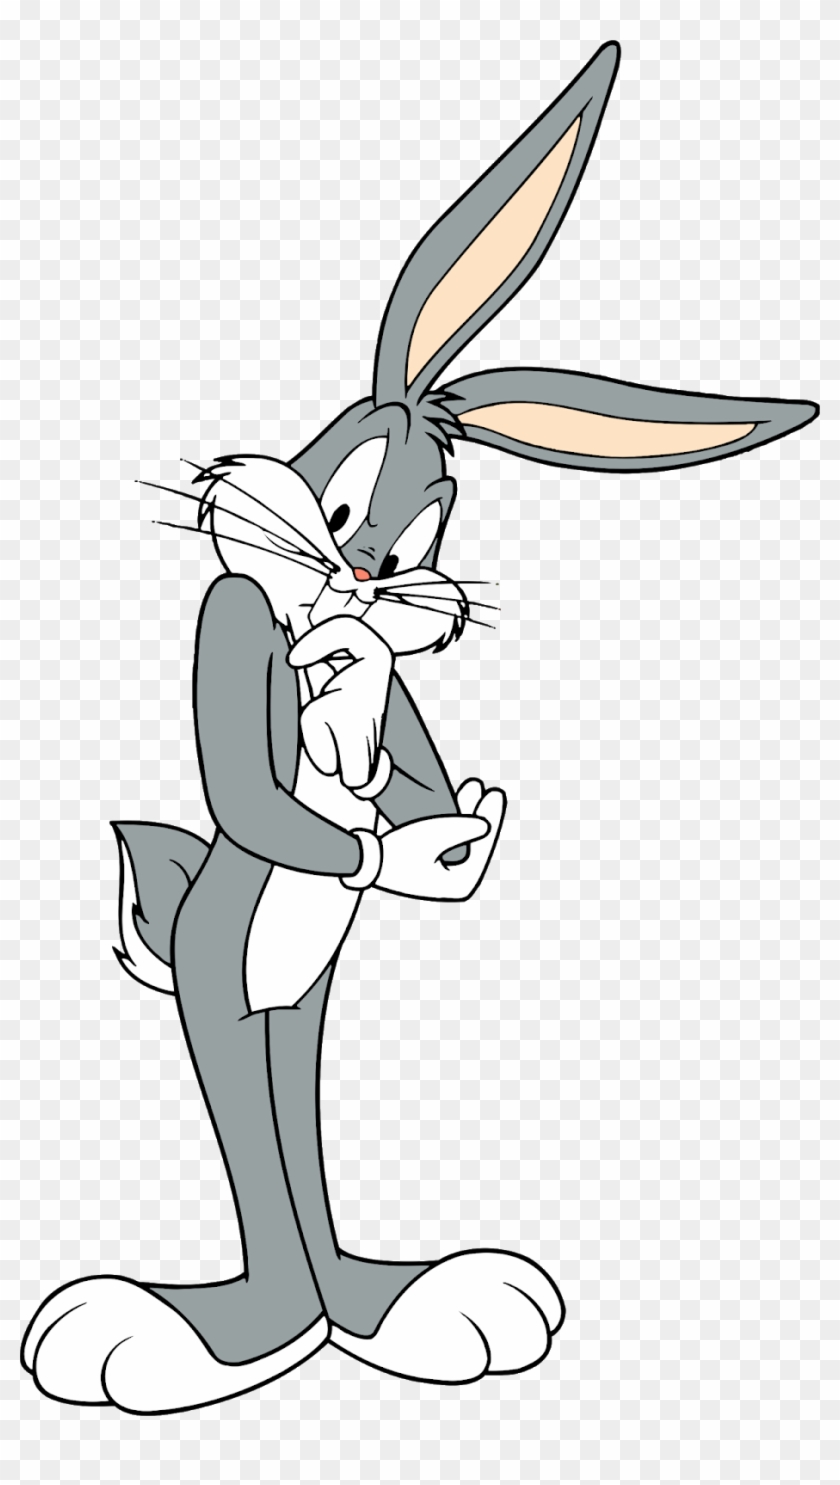 Bugs Bunny Characters, Bugs Bunny Cartoon Characters, - Bugs Bunny Thinking Clipart #855237